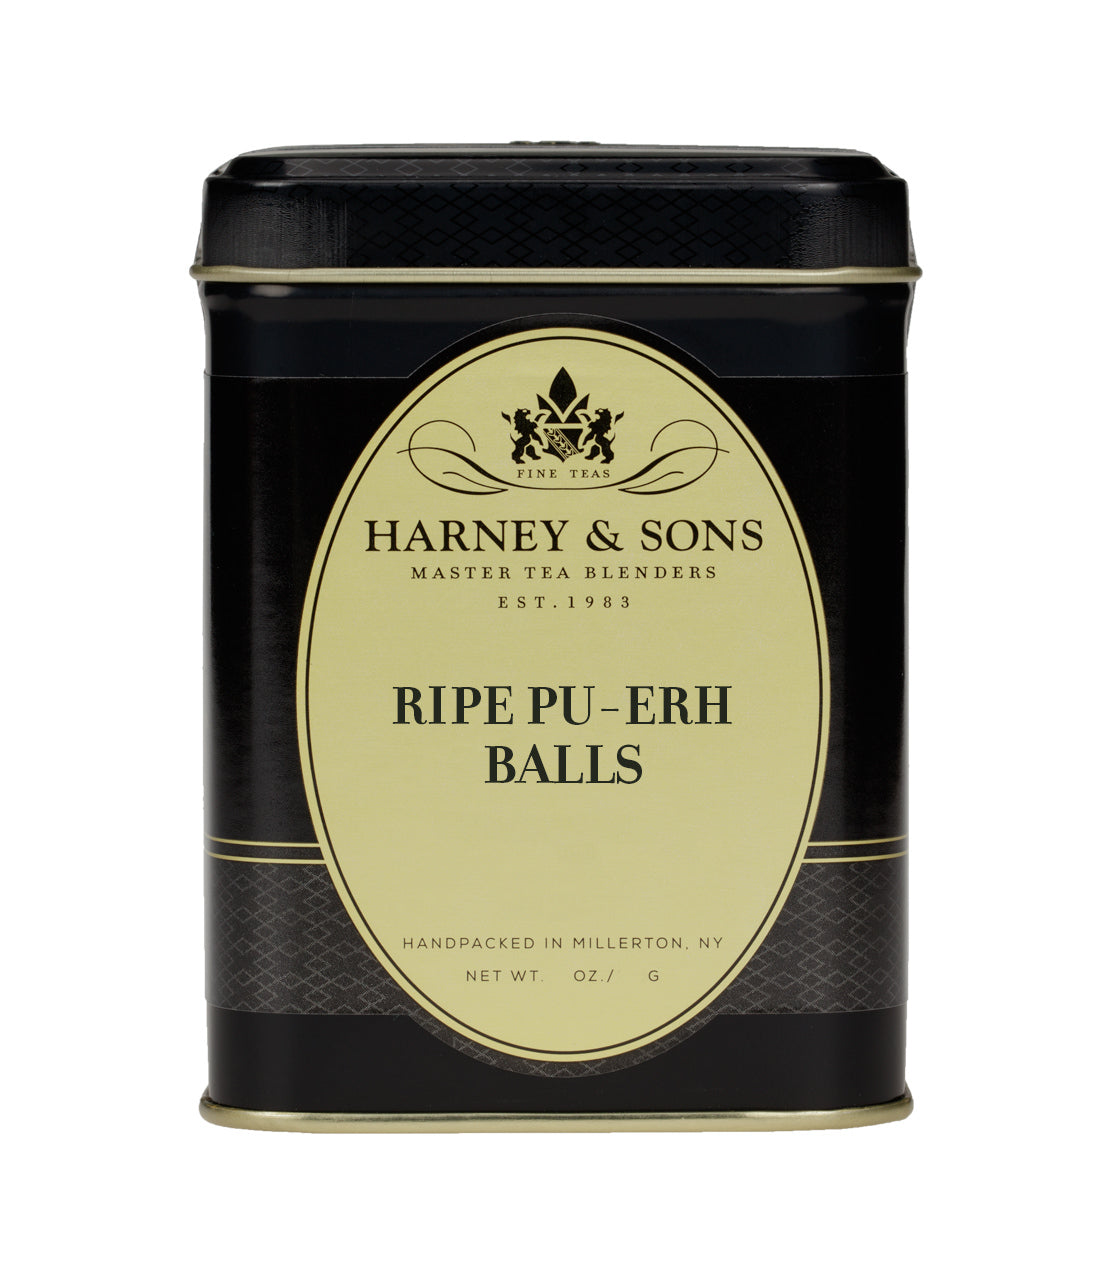 Ripe Pu-Erh Balls - Loose 3 oz. Tin - Harney & Sons Fine Teas